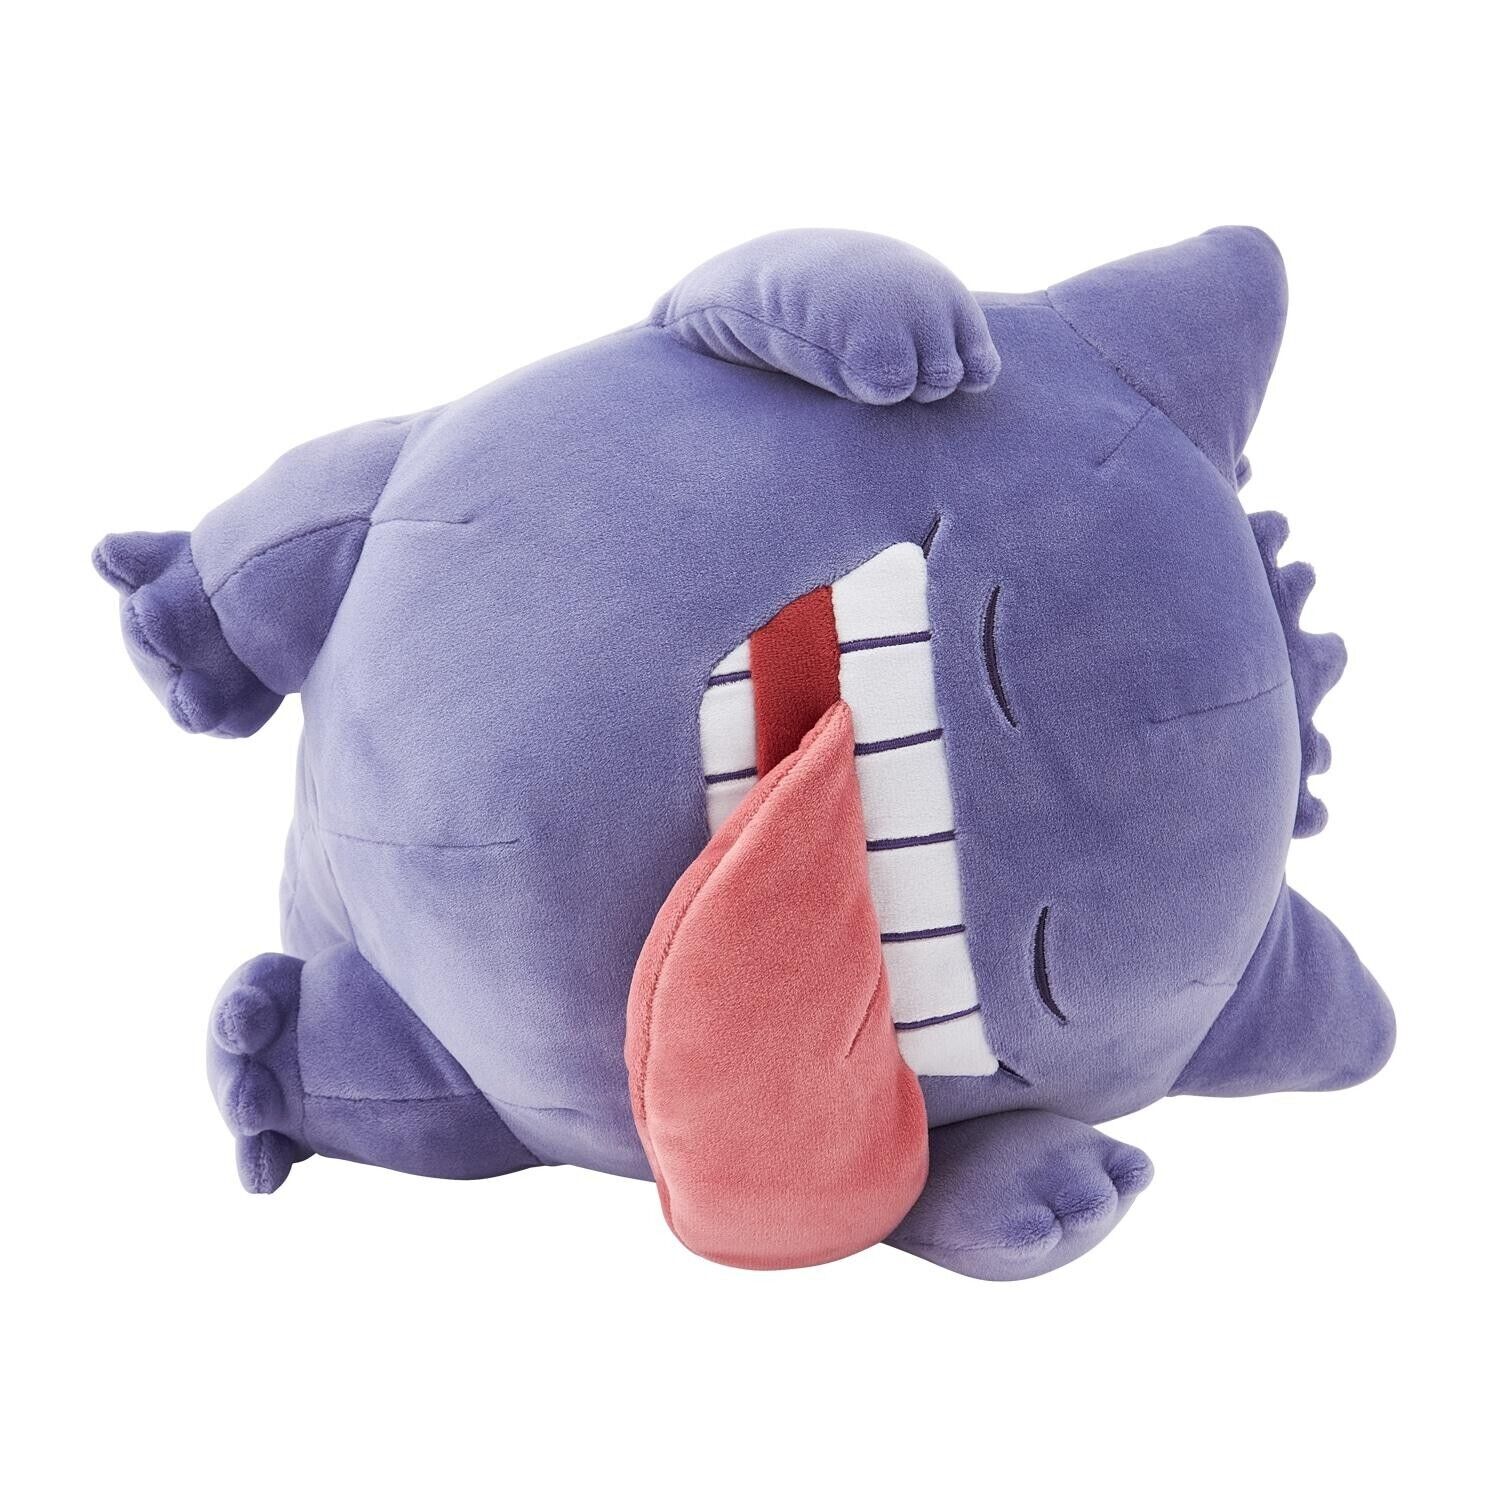 Pokemon Fluffy Plush Gengar / Pokémon Sleep Stuffed Toy Doll Pocket Monster